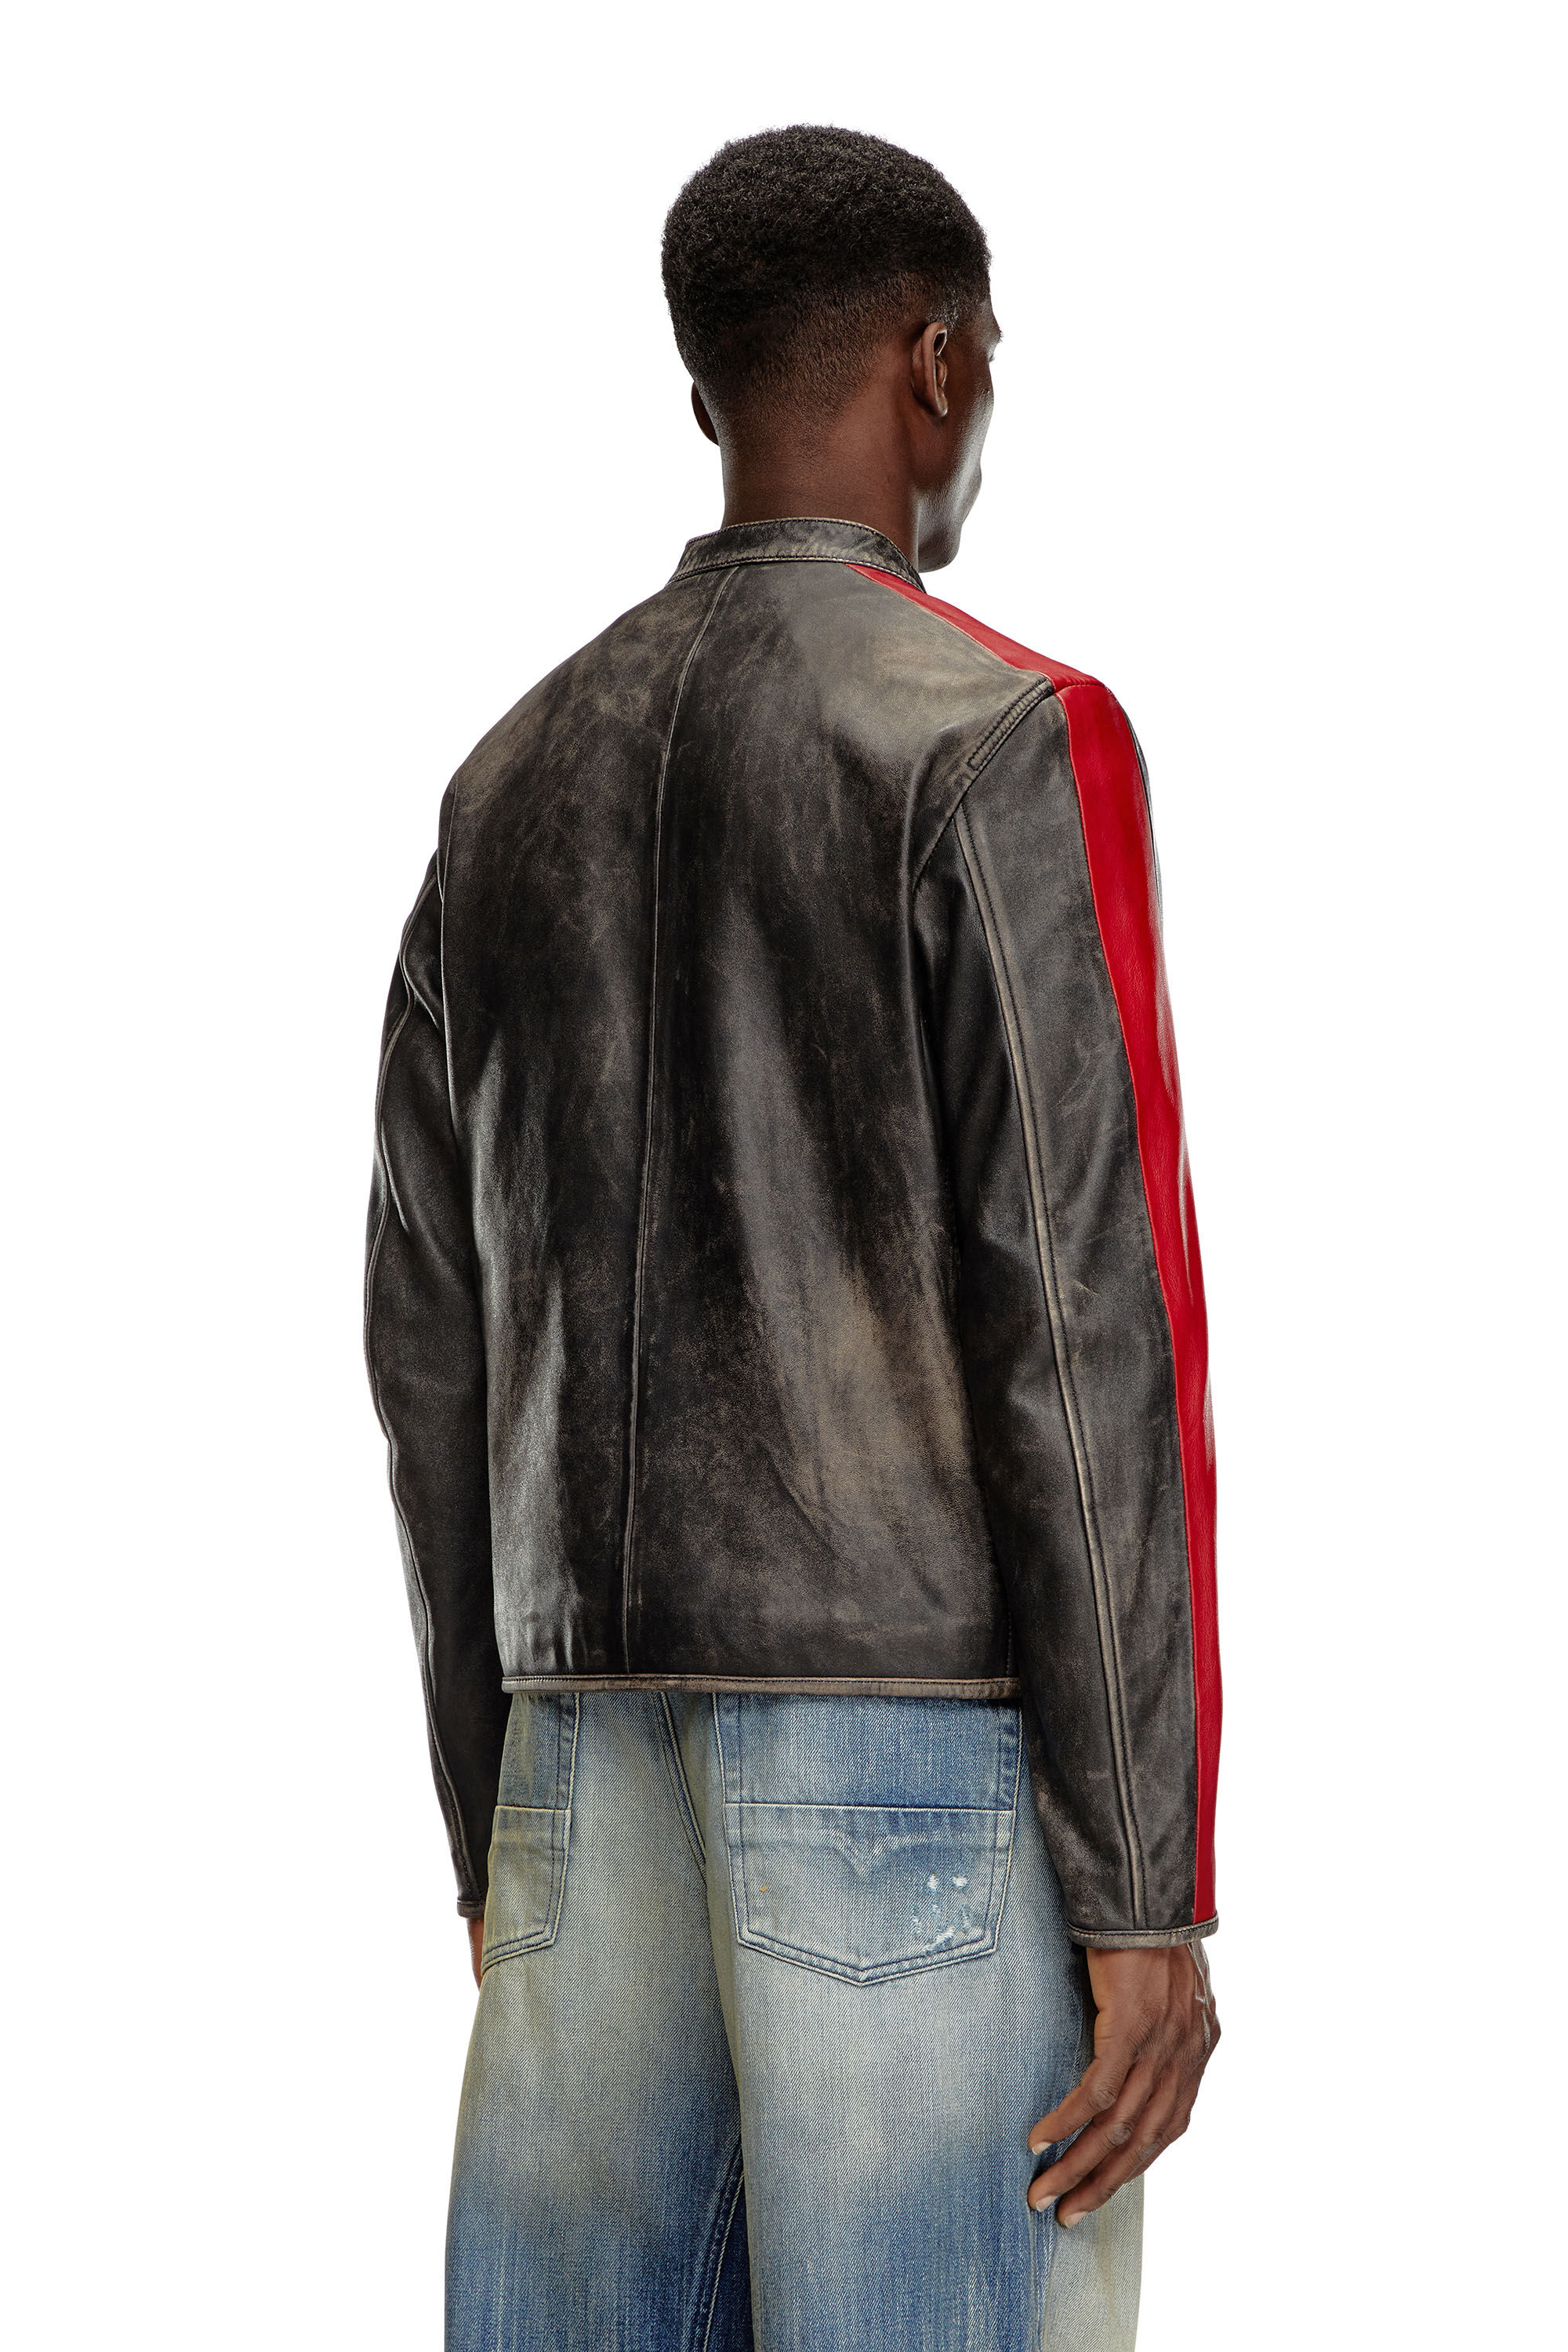 Diesel - L-RENN, Homme Veste en cuir à rayures contrastées in Polychrome - Image 4